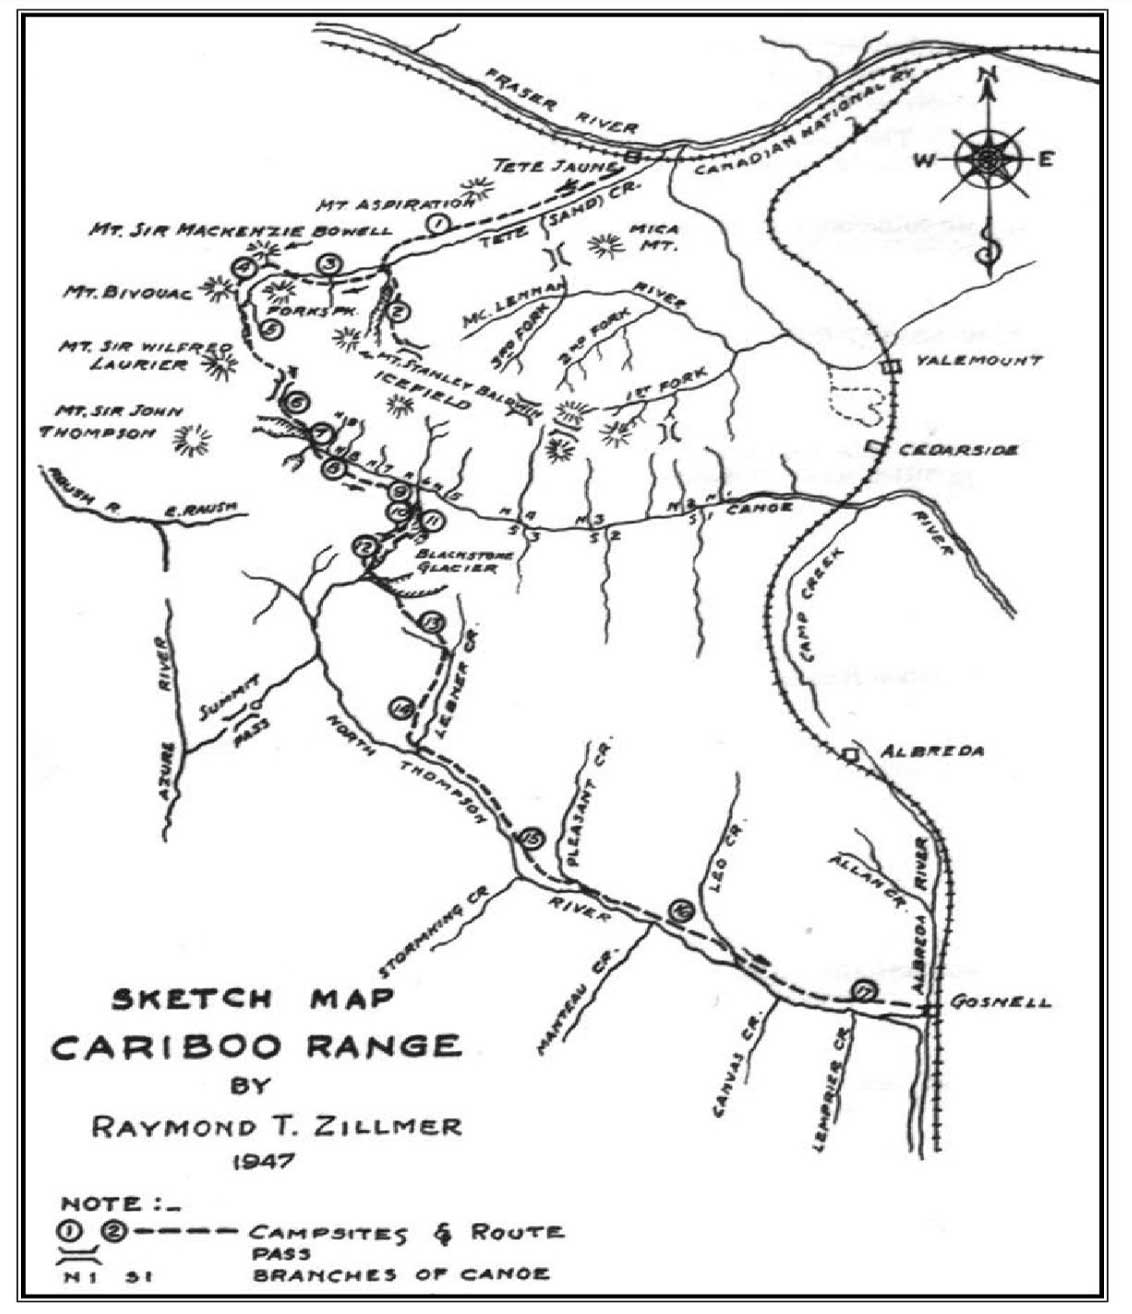 Sketch map Cariboo Range
Raymond T. Zillmer, 1947